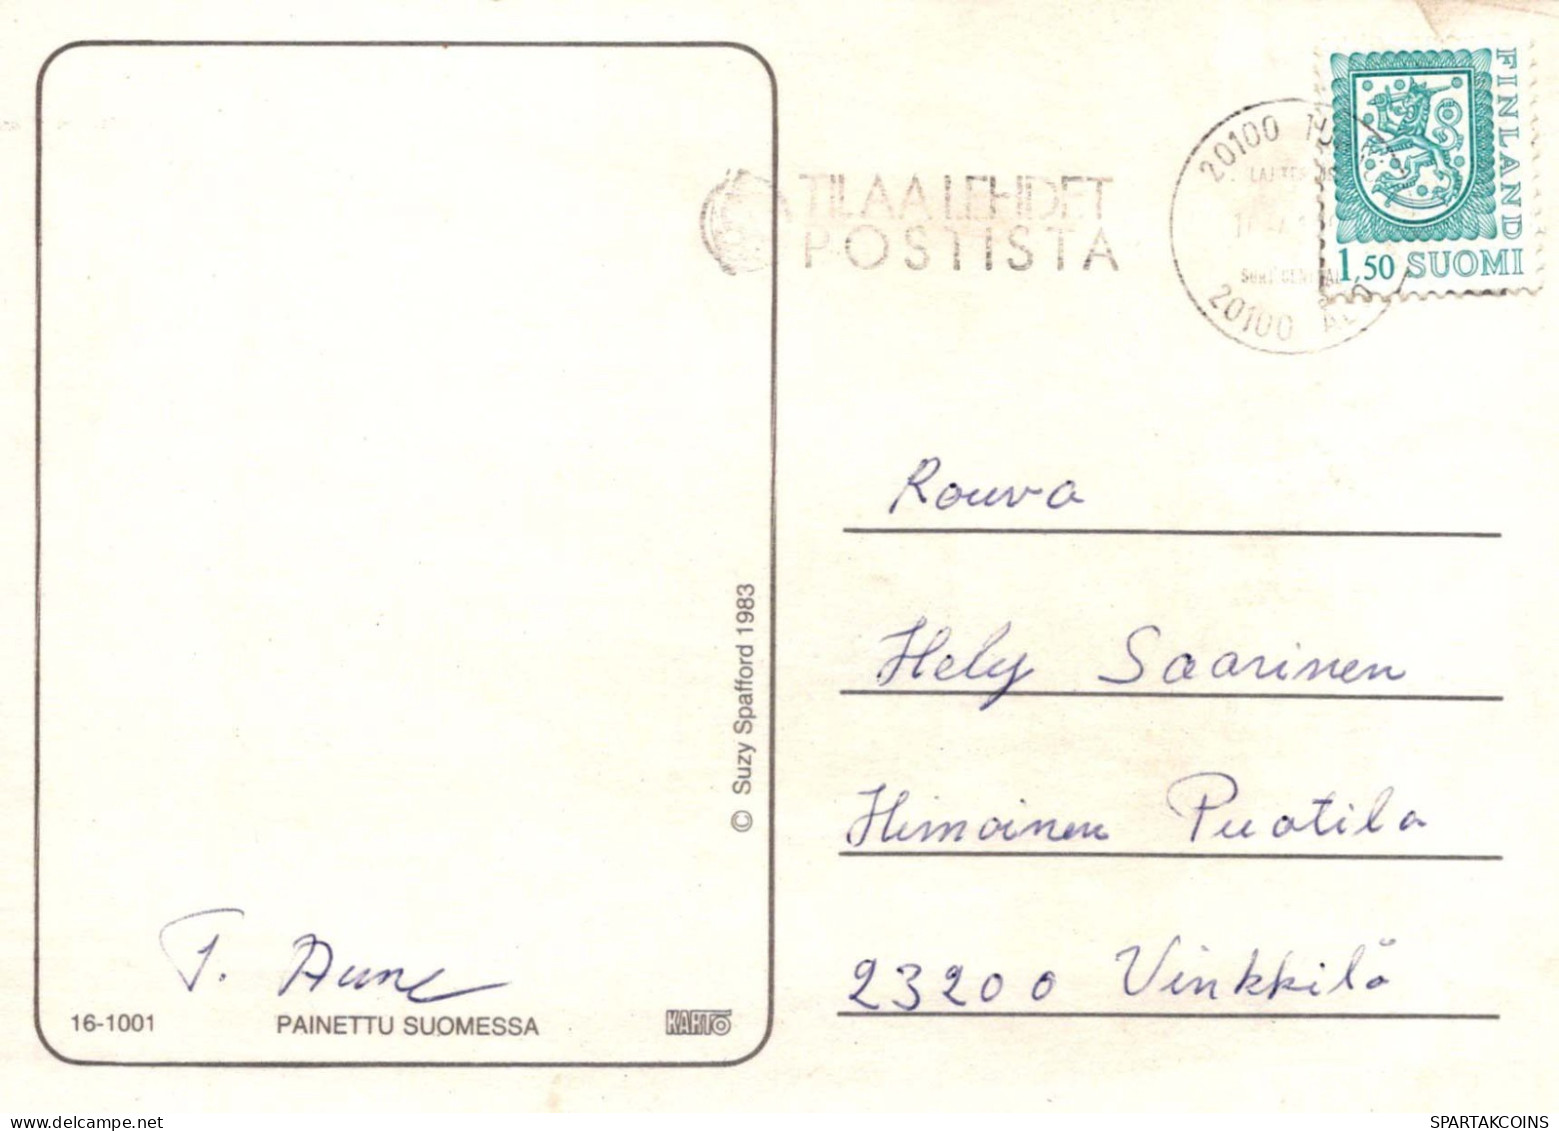 EASTER CHICKEN EGG Vintage Postcard CPSM #PBP039.GB - Ostern